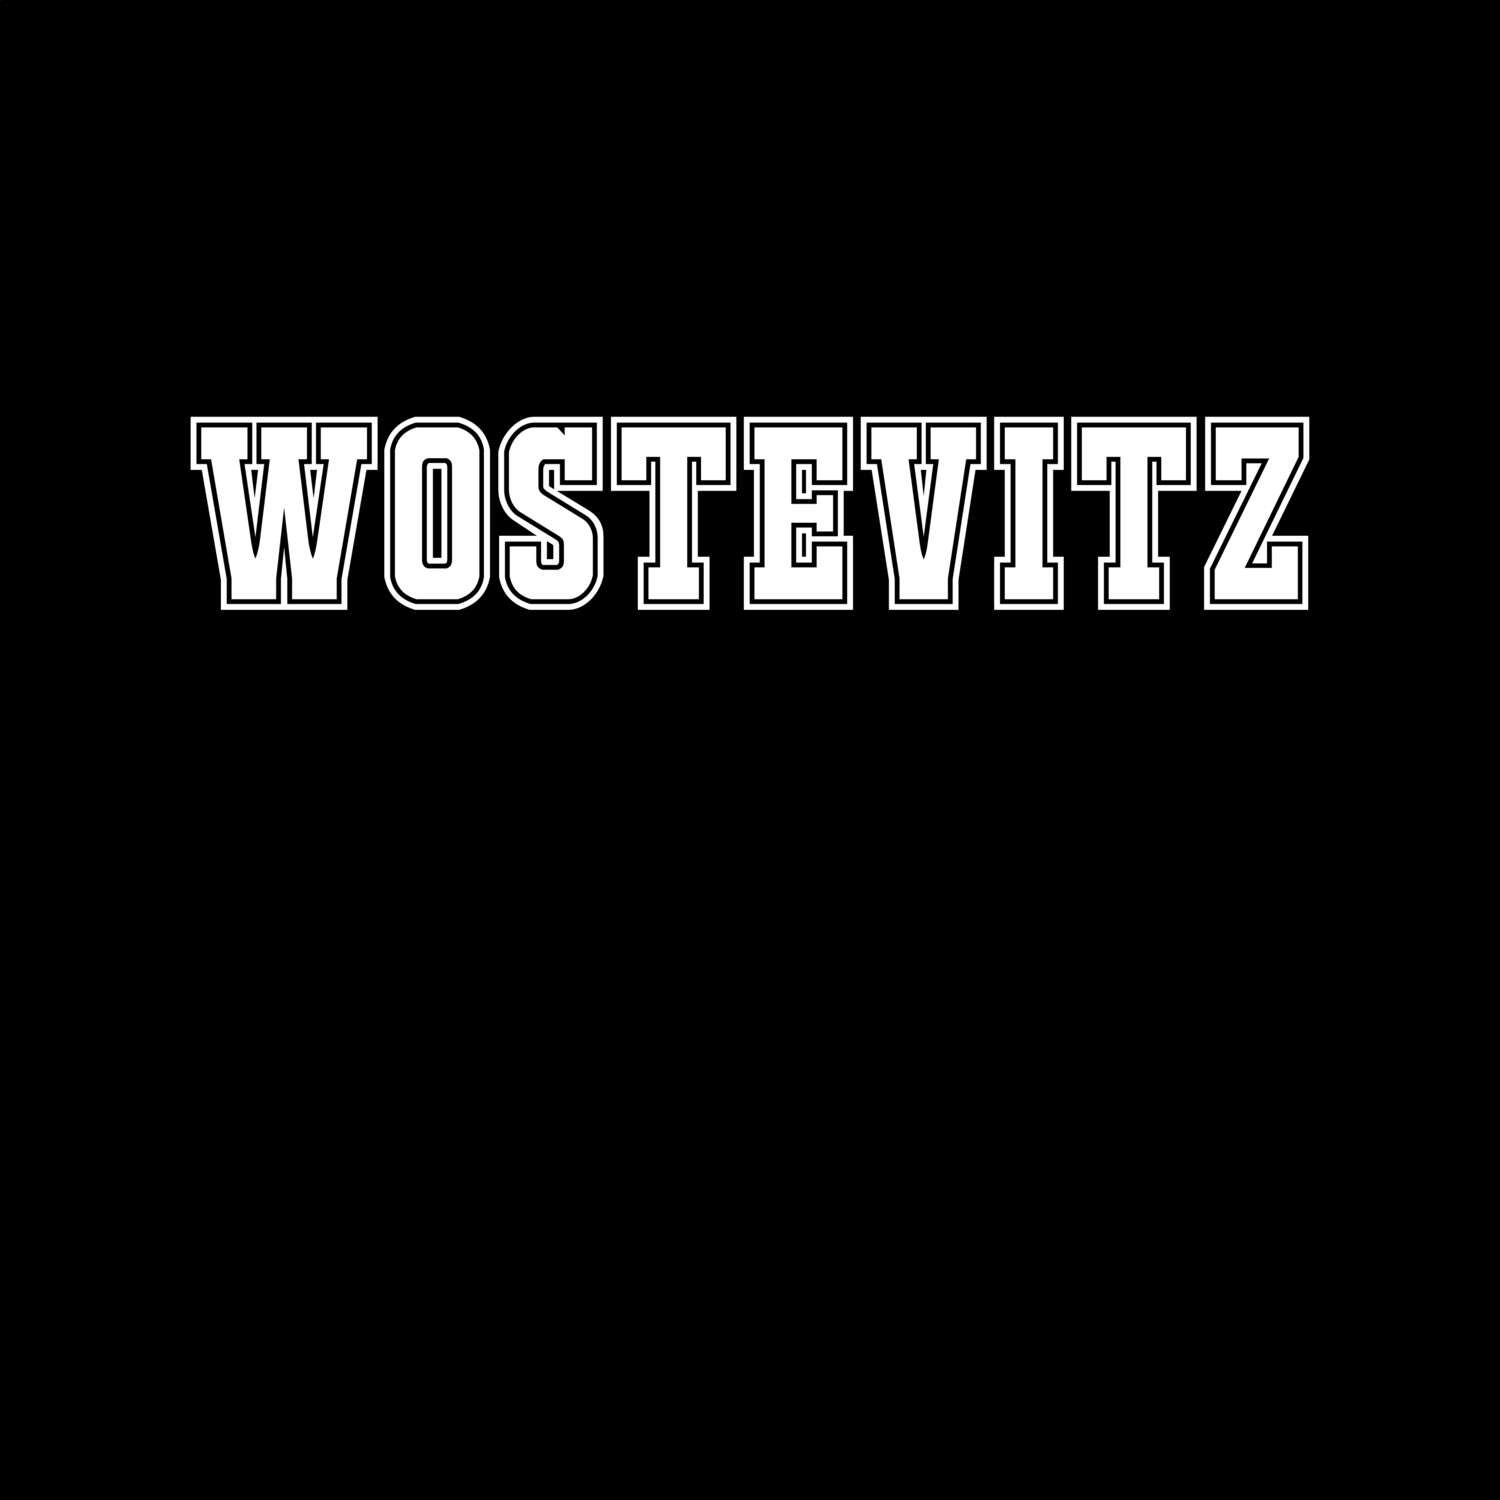 Wostevitz T-Shirt »Classic«